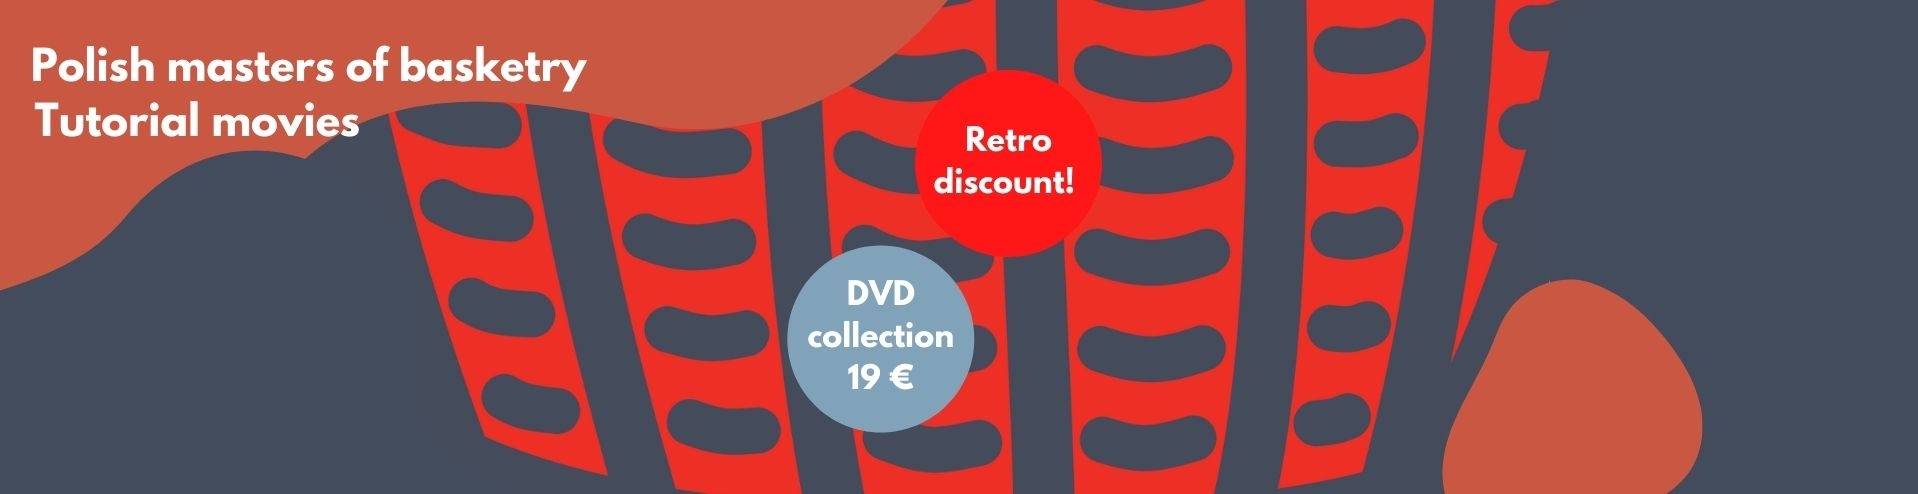 61def3eeb01f5_super-discount-retro-dvd-tutorial-movies-polish-masters-of-basketry-serfenta-craft-crafters.jpg